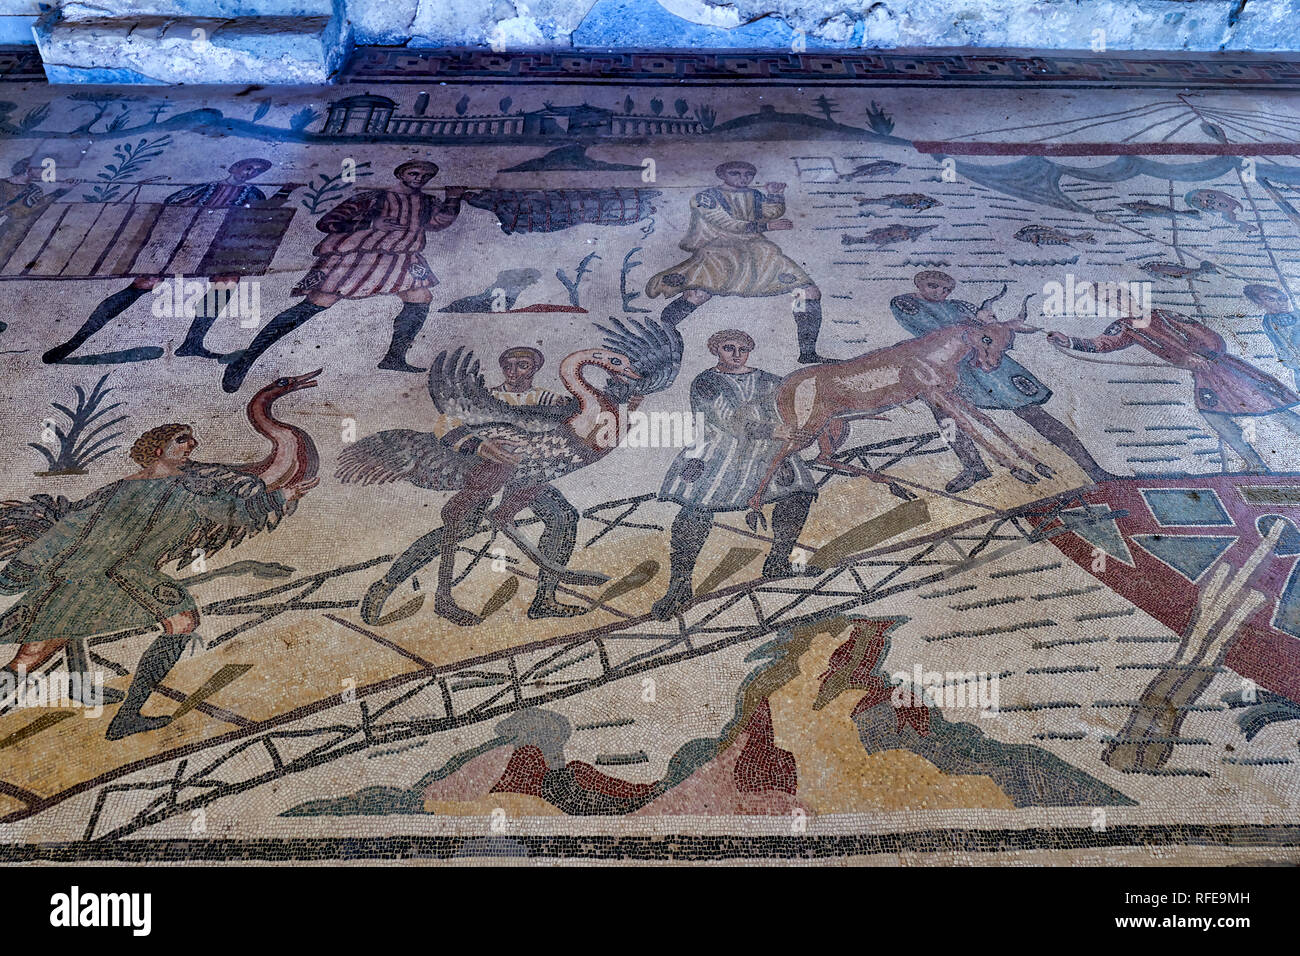 Mosaics at Villa Romana del Casale (Roman Villa) in Piazza Armerina Sicily Italy Stock Photo